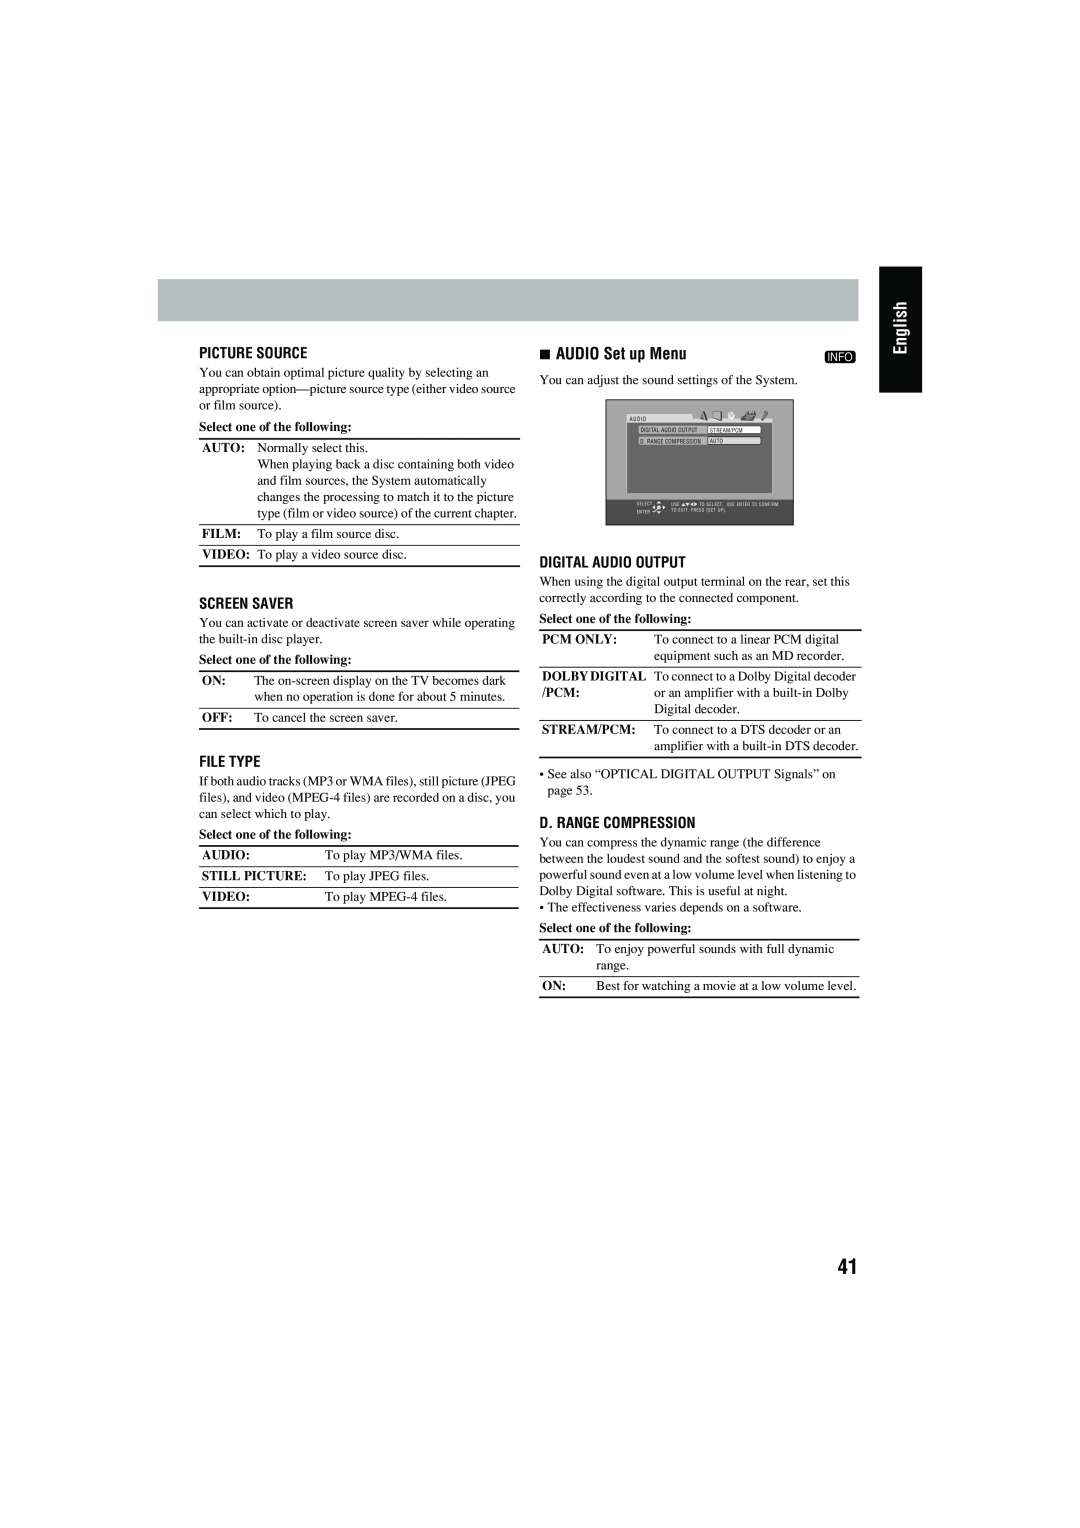 JVC CA-MXJD8UW manual English, AUDIO Set up Menu, Picture Source, Screen Saver, File Type, Digital Audio Output, Video 